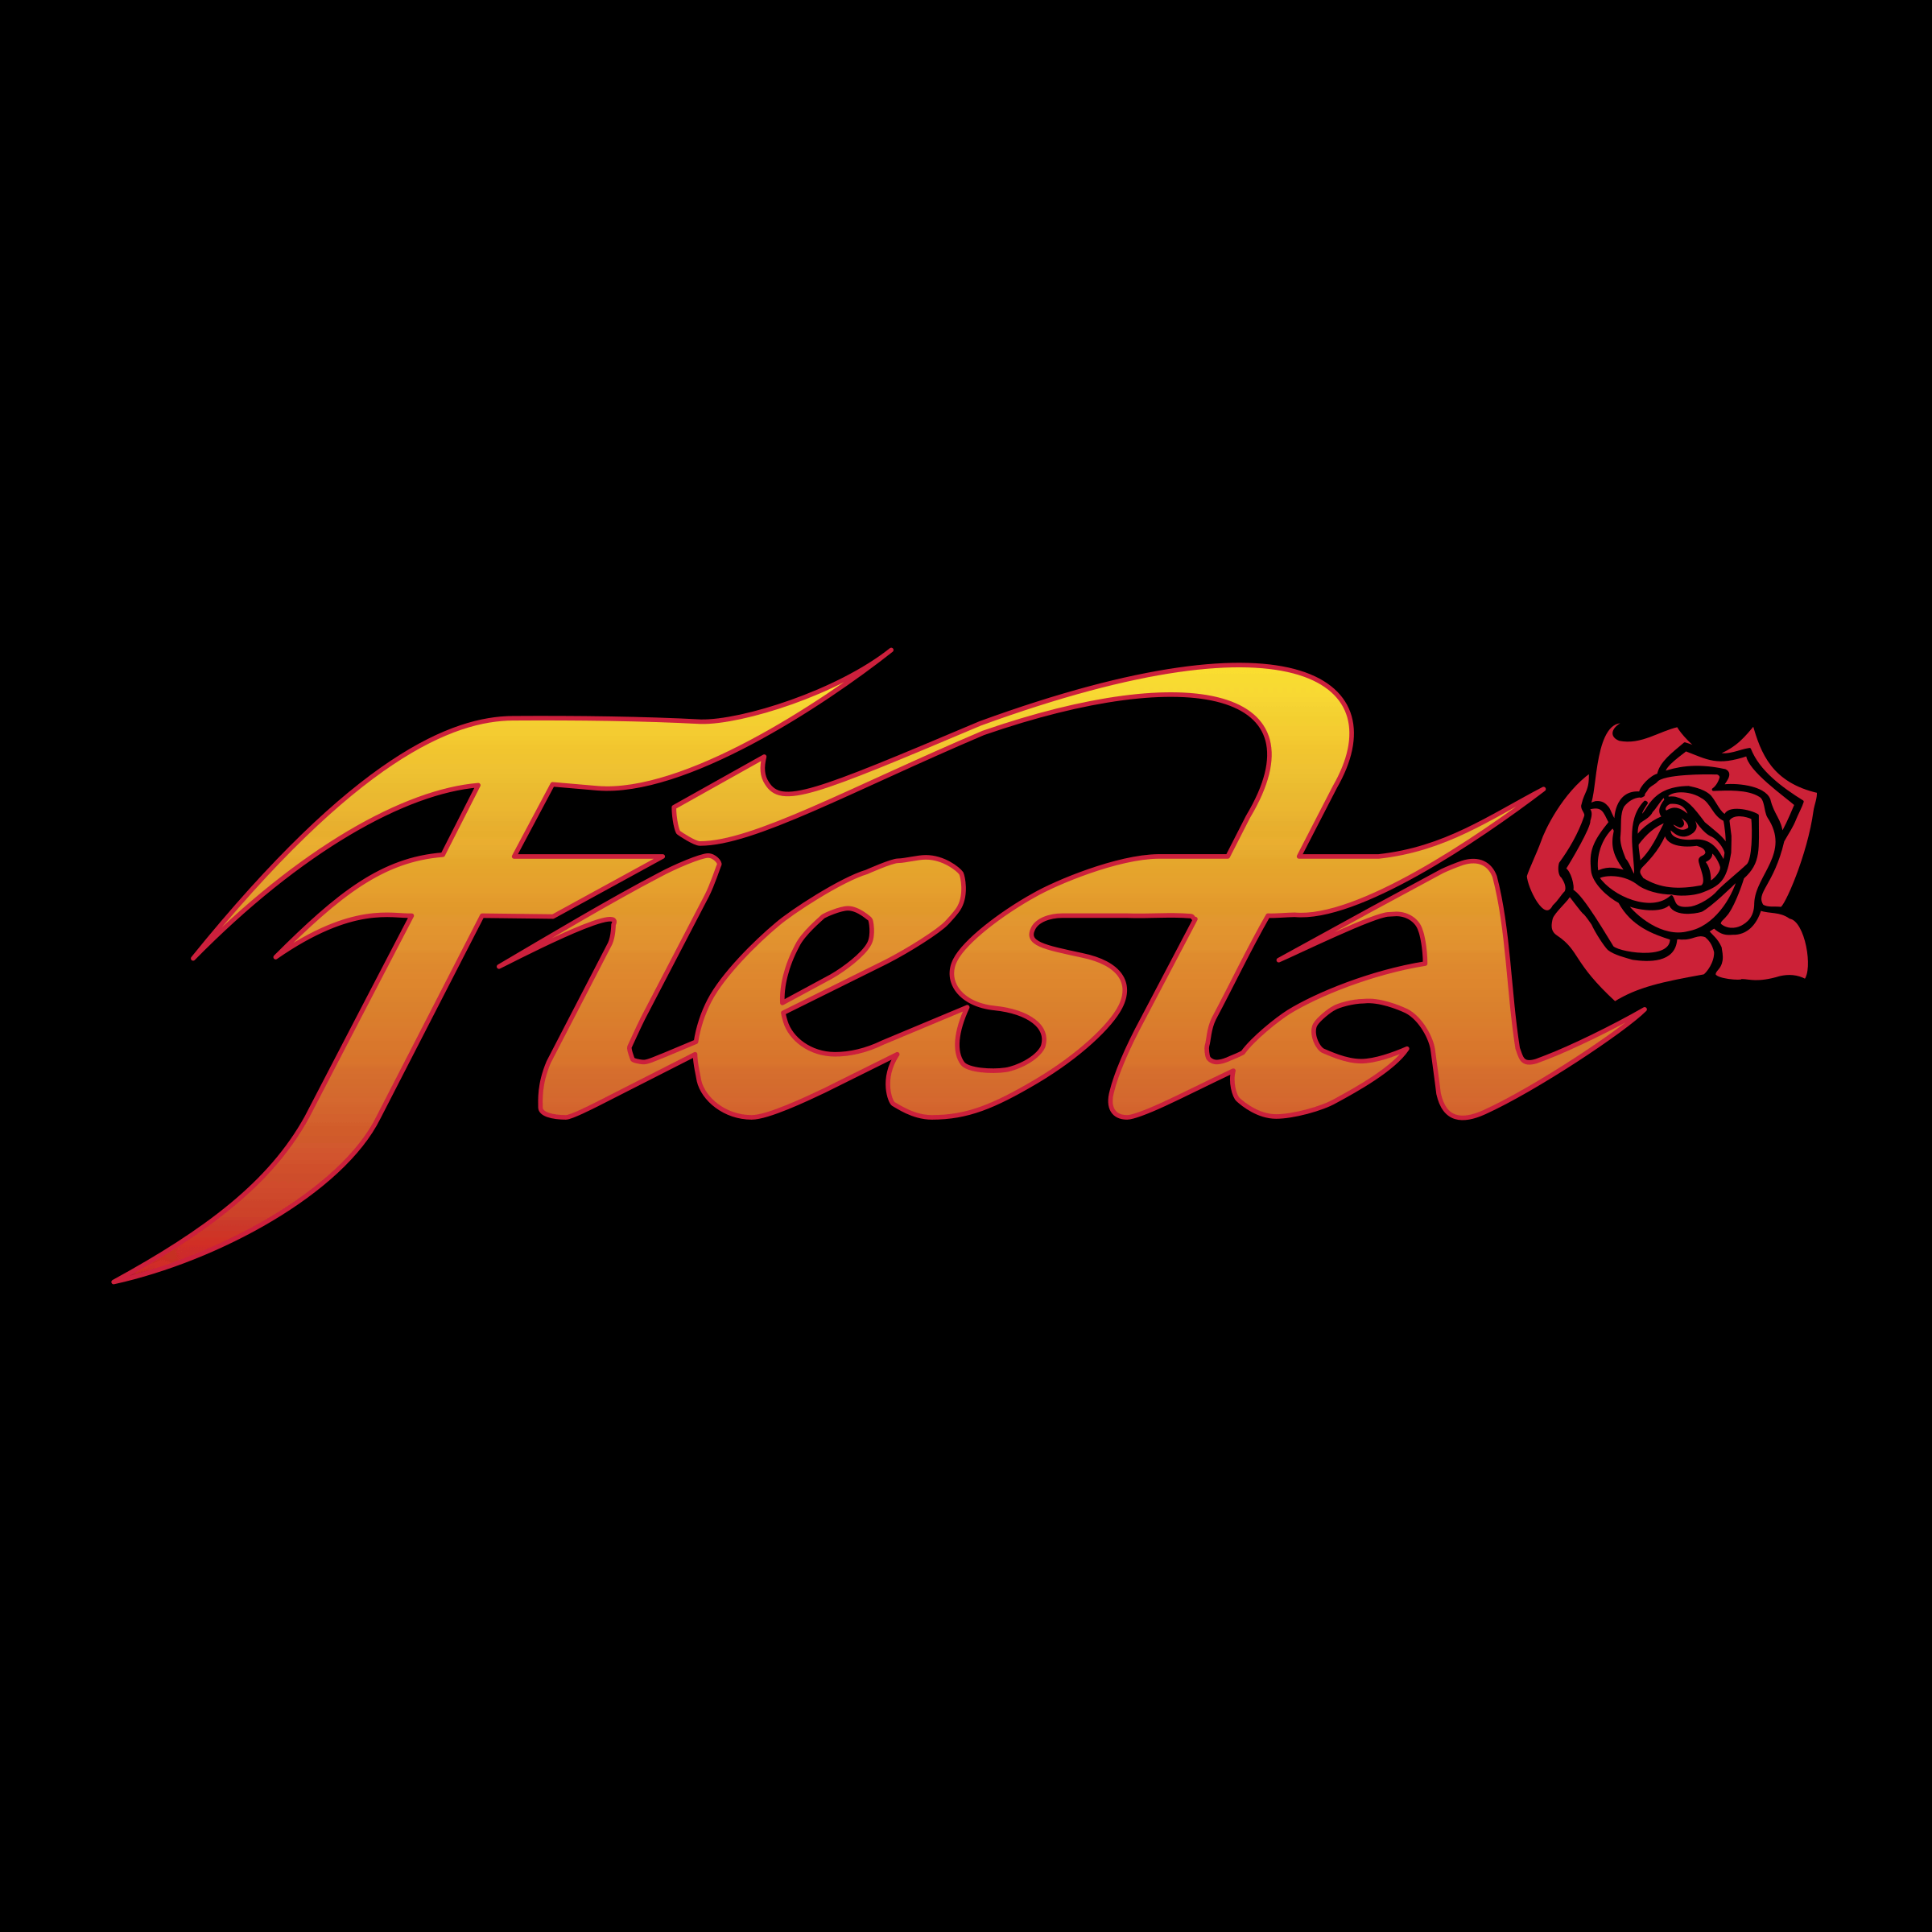 Fiesta Logo - Fiesta Logo PNG Transparent & SVG Vector - Freebie Supply